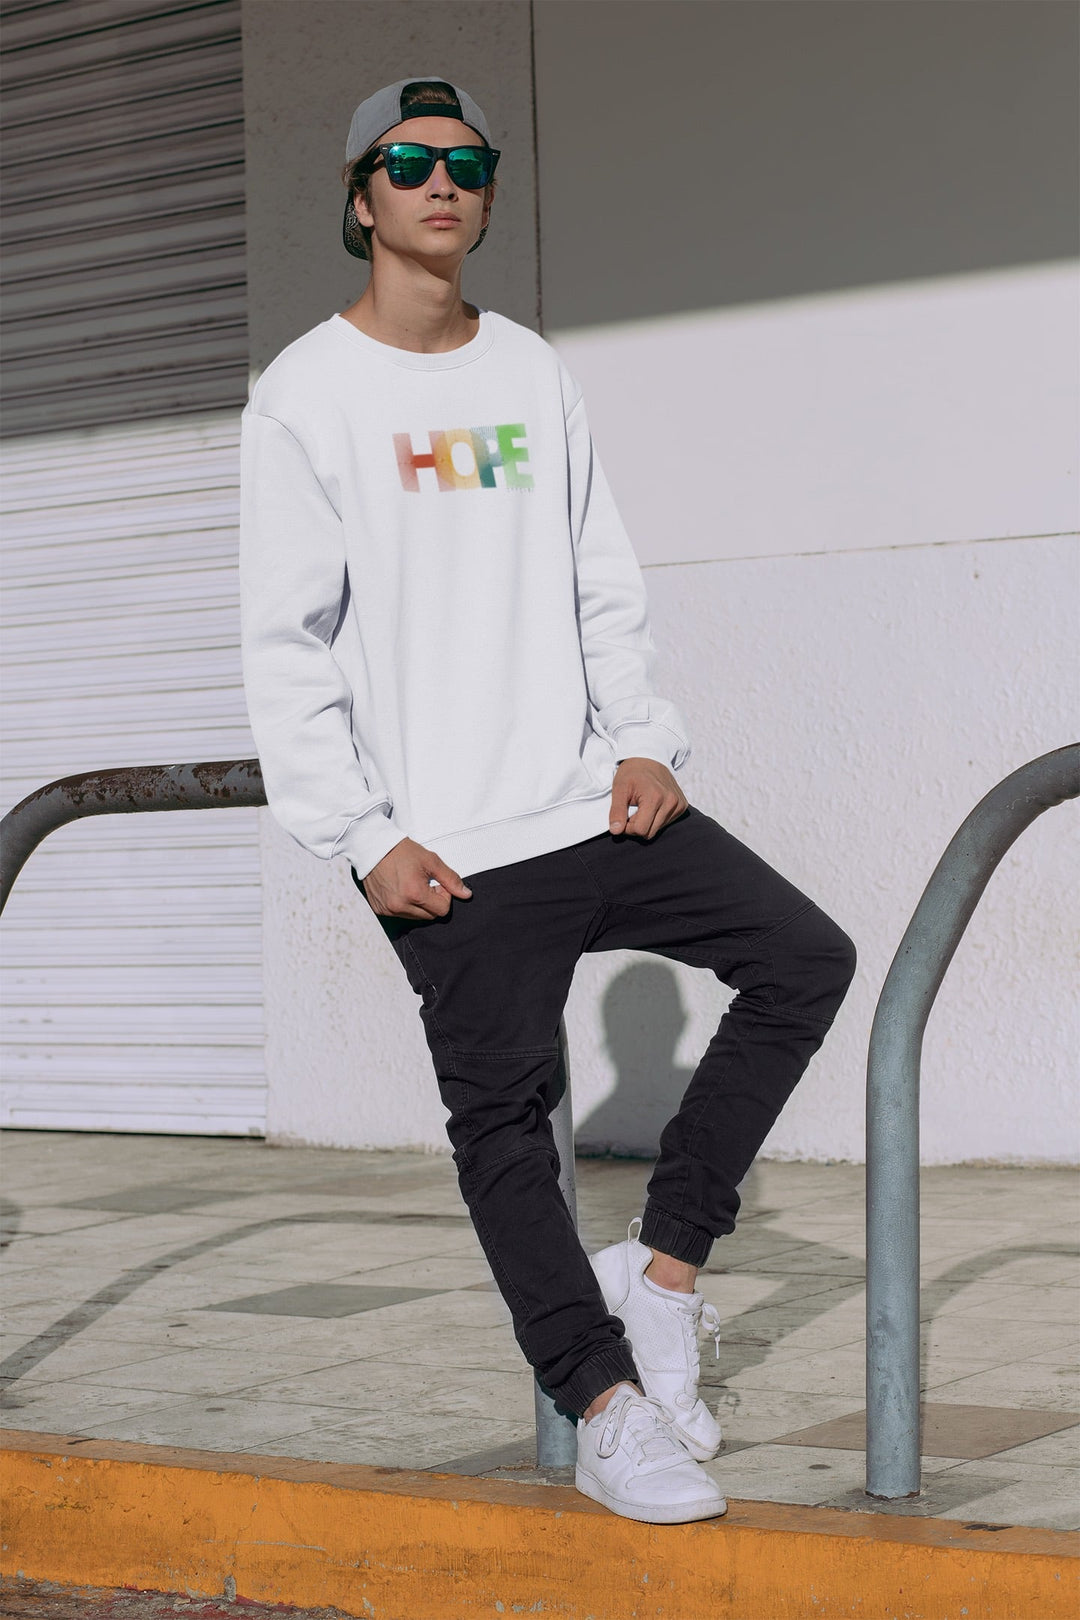 EFFENTII Hope - Champion Men's Sweatshirt